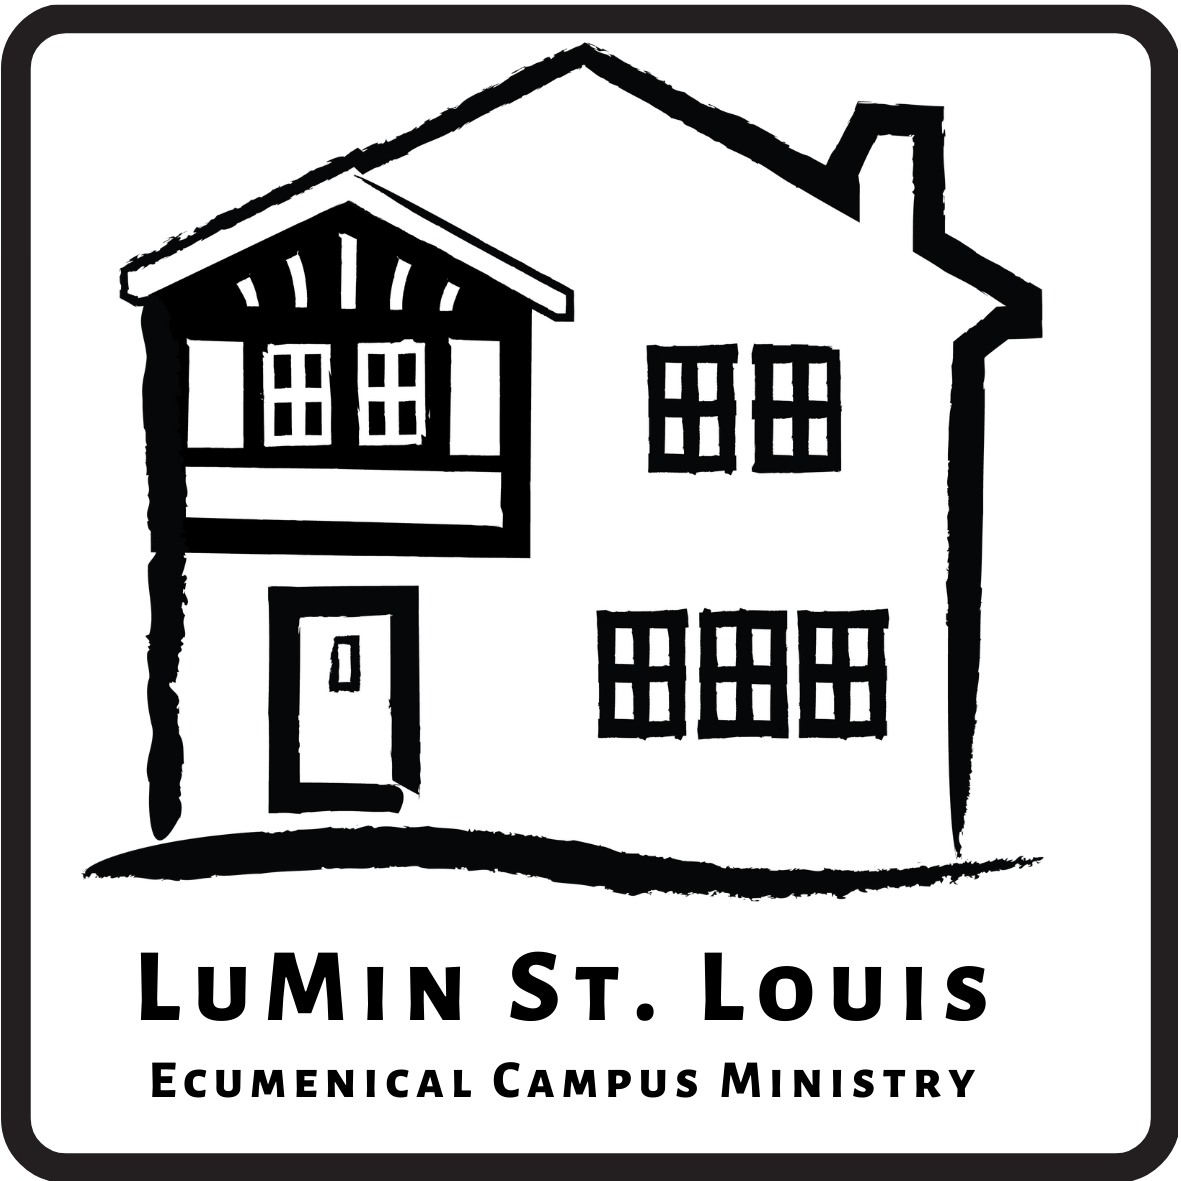 LuMin St. Louis Ecumenical Campus Ministry